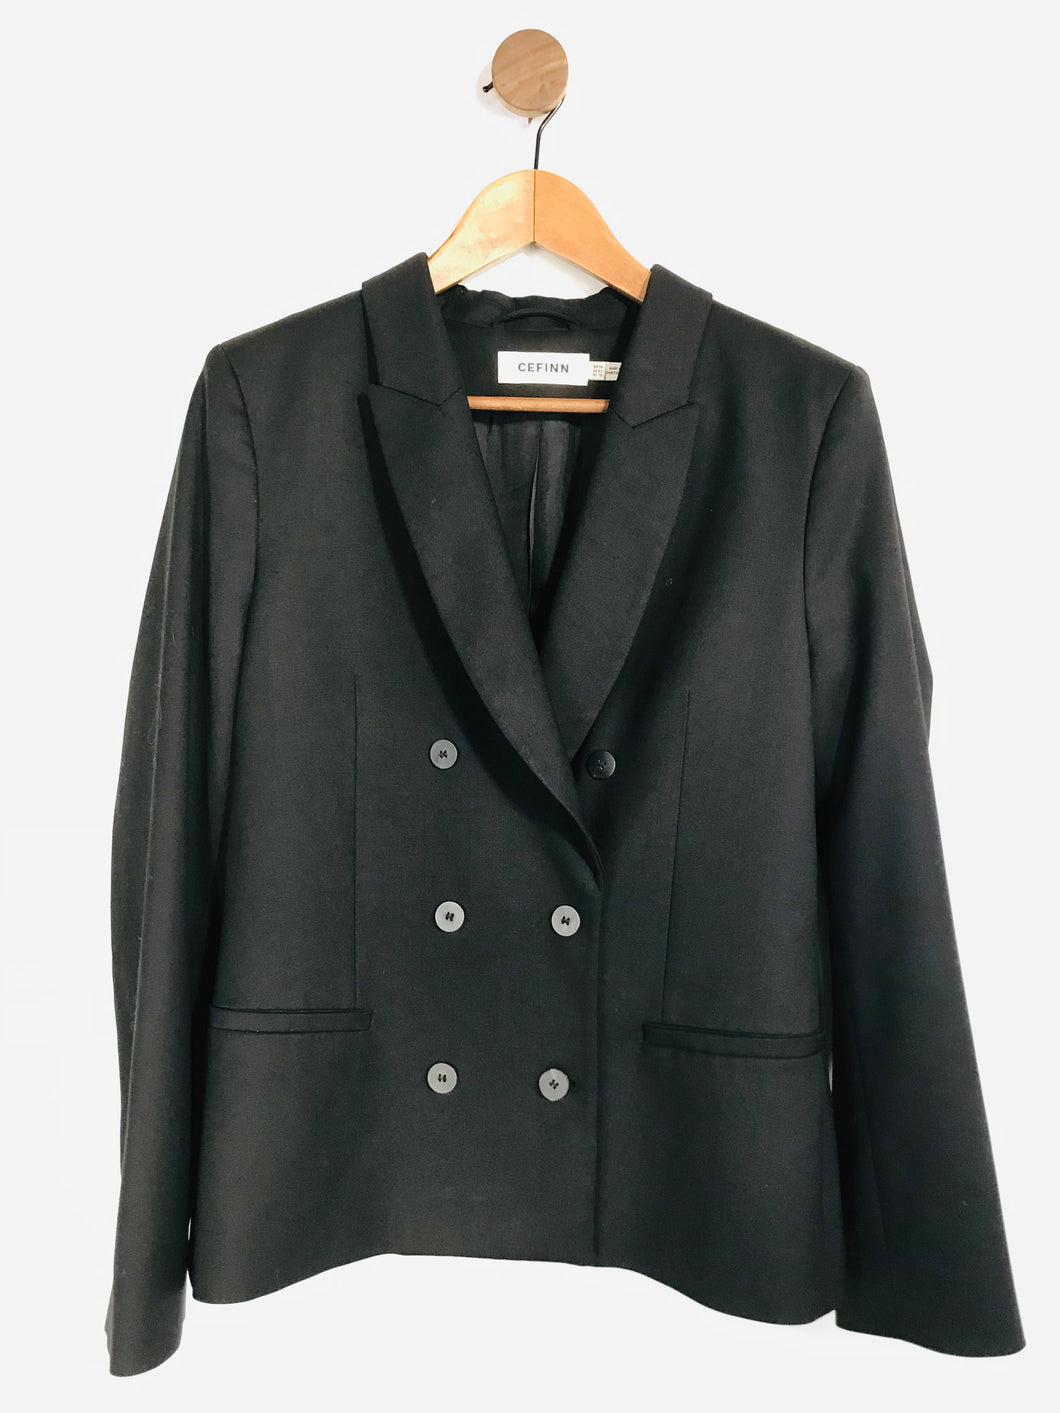 Cefinn Women's Wool Blazer Jacket | EU42 UK14 | Black